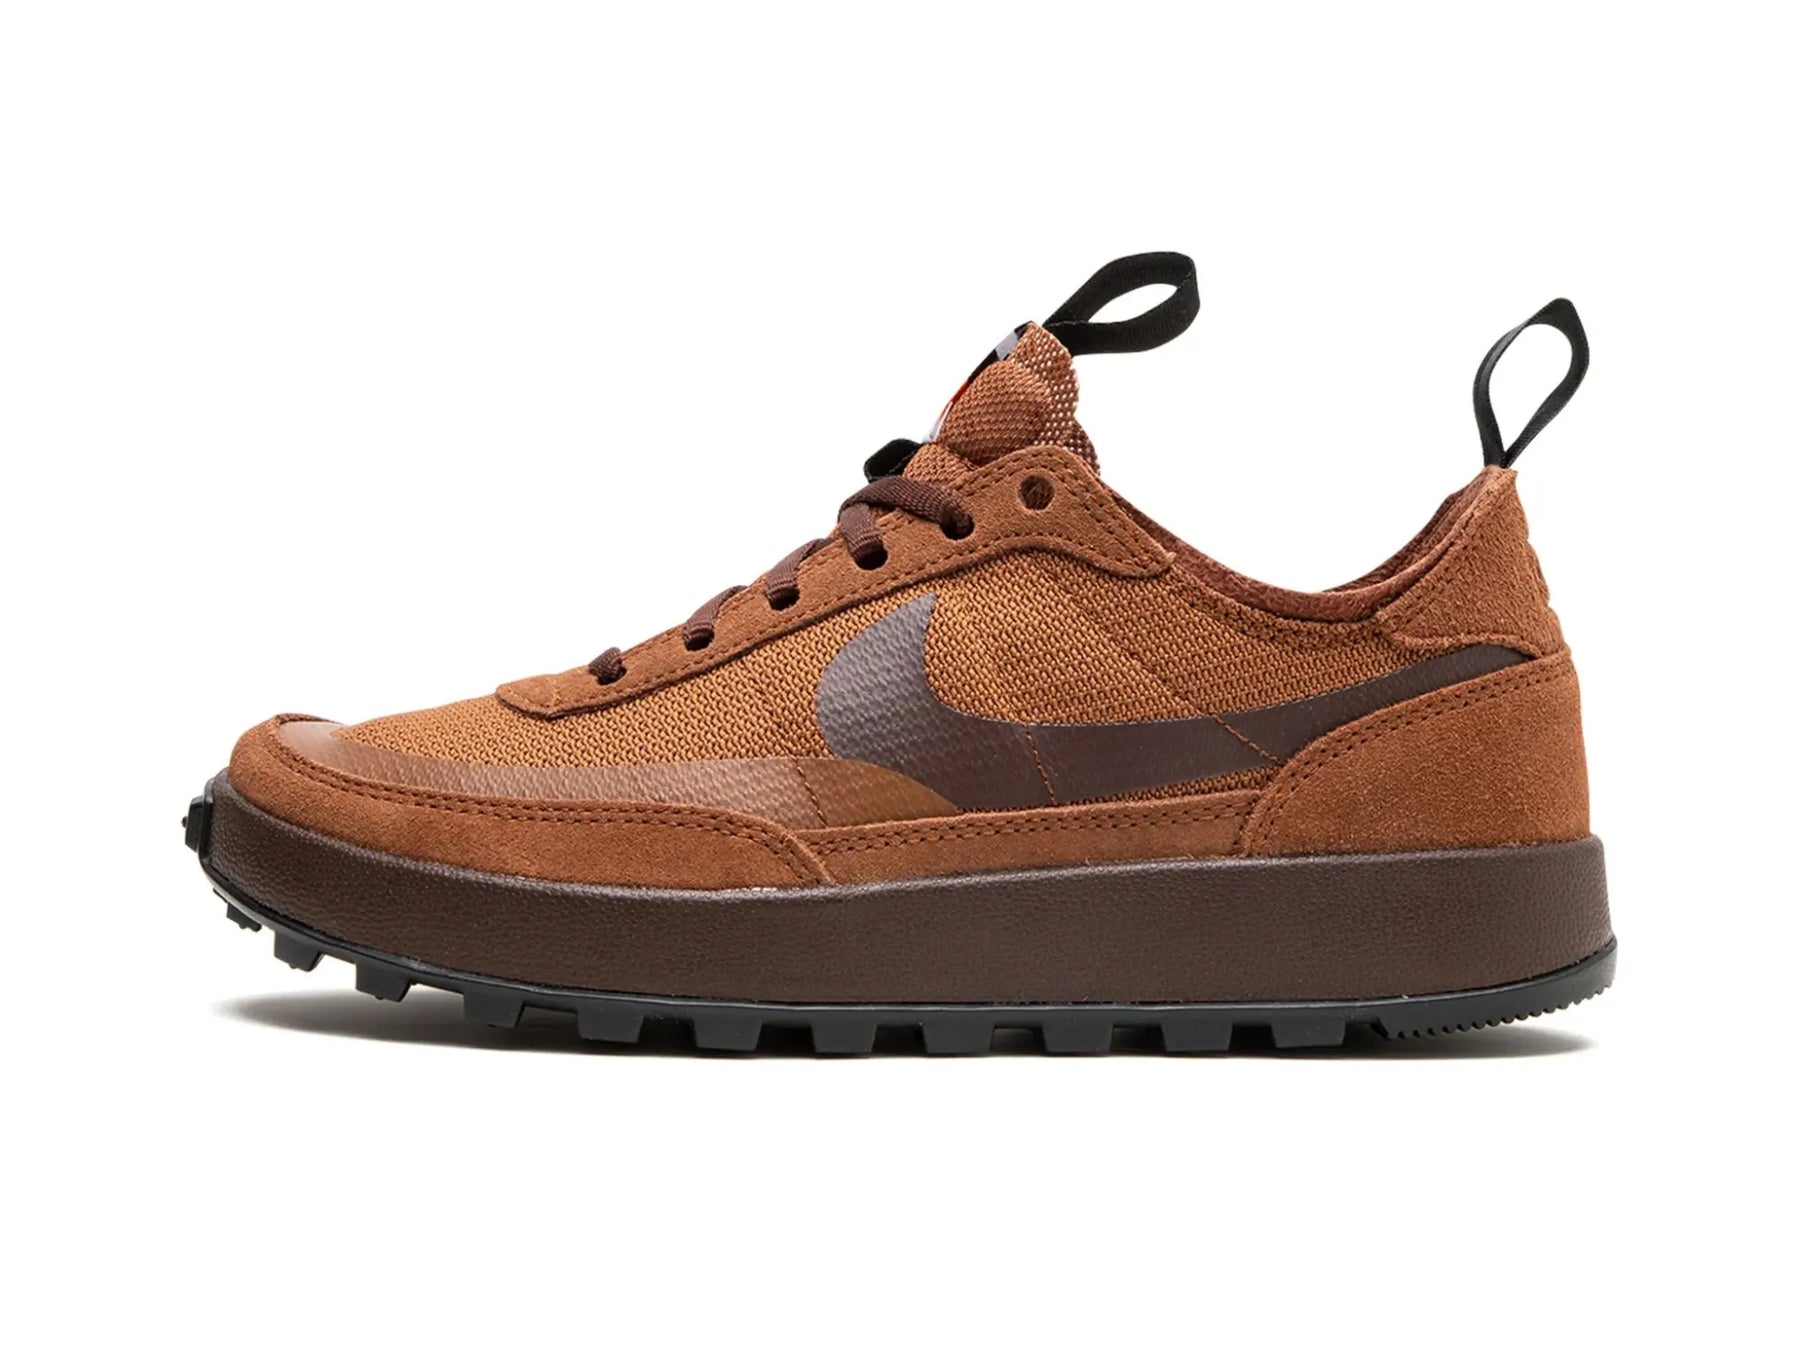 Nike Nikecraft General Purpose Shoe X Tom Sachs "Field Brown" - street-bill.dk